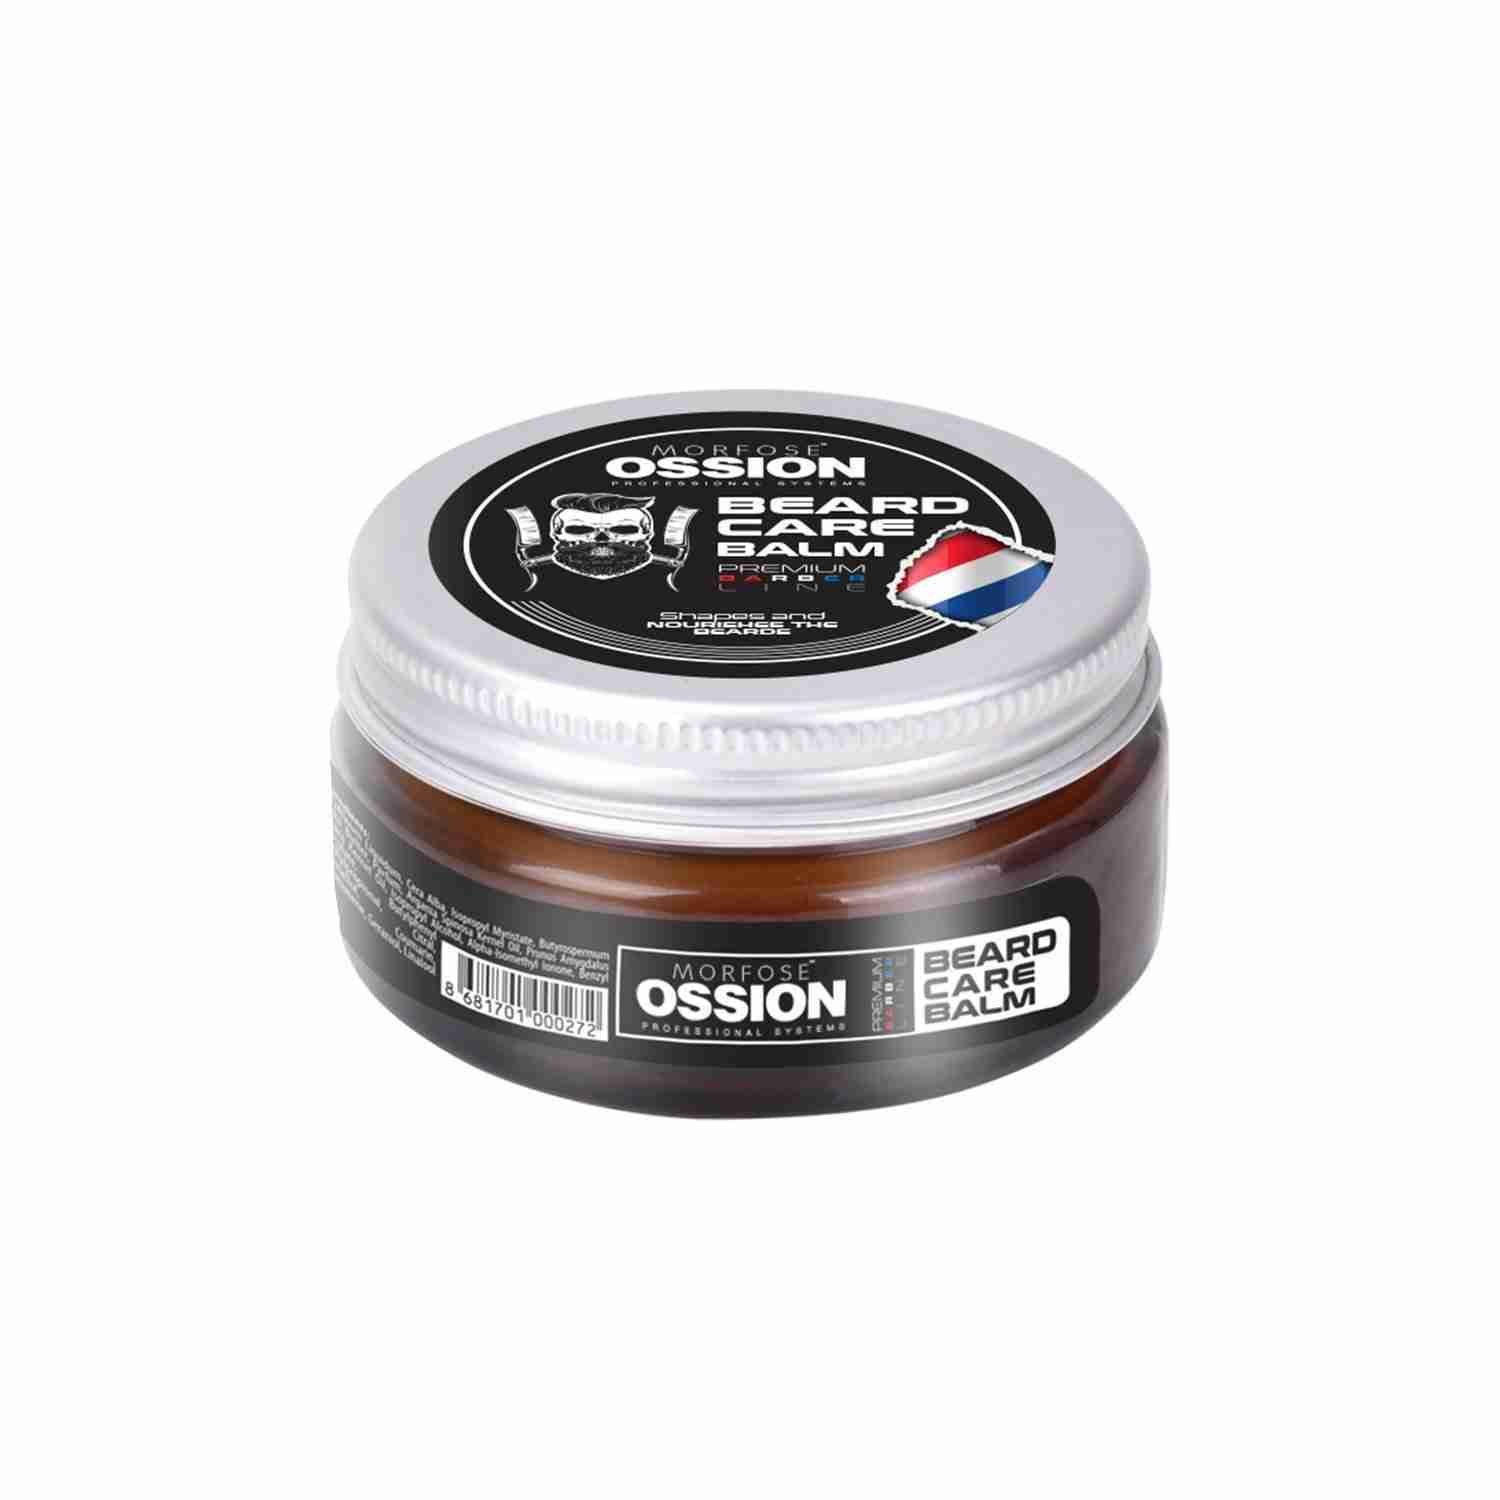 118372Ossion Premium Barber Line Beard Care Balm With Argan & Bitter Almond Oil -50ml